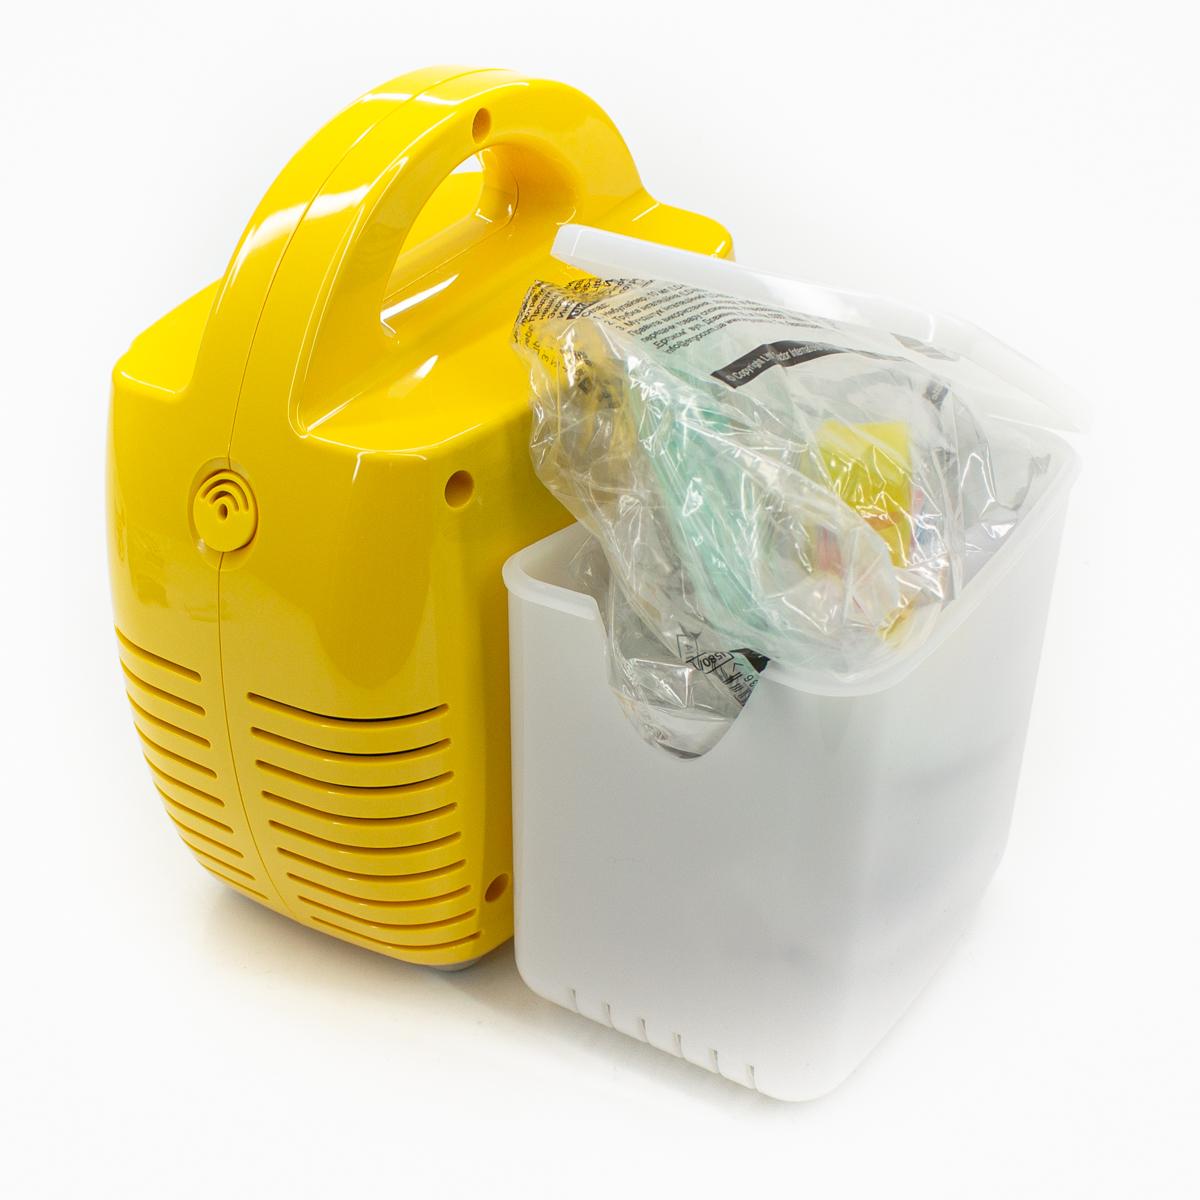 Компрессорный ингалятор небулайзер LD-211 желтый детский Little Doctor